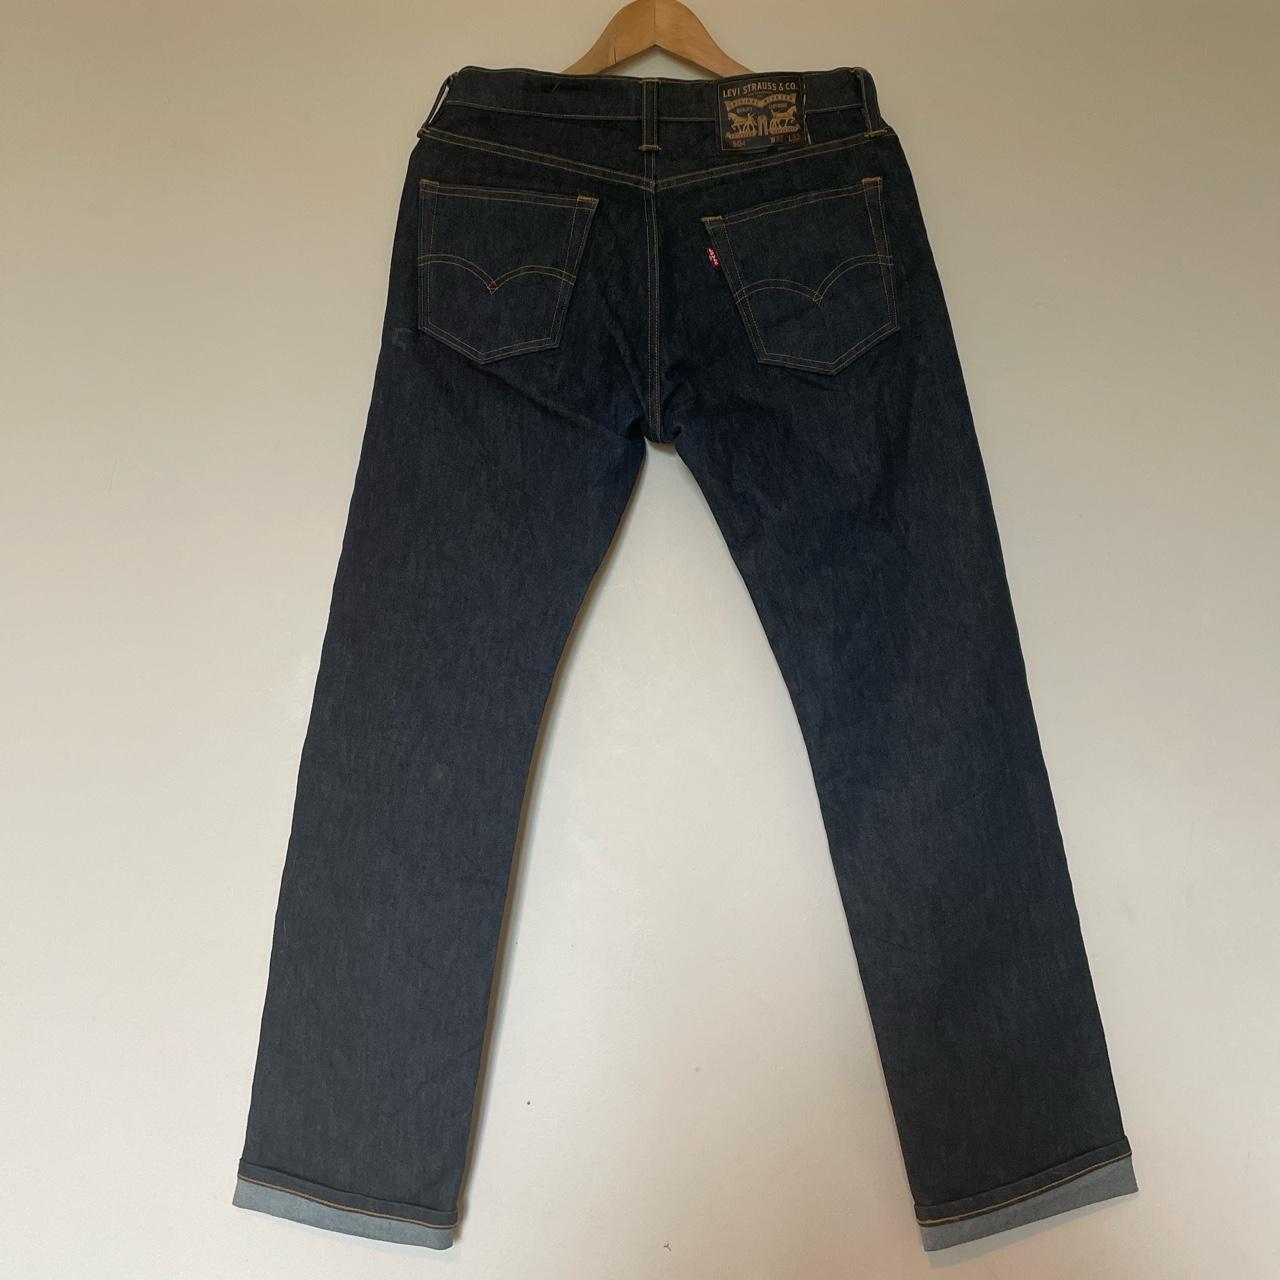 Rare LEVIS 504 skateboard collection jeans.... - Depop